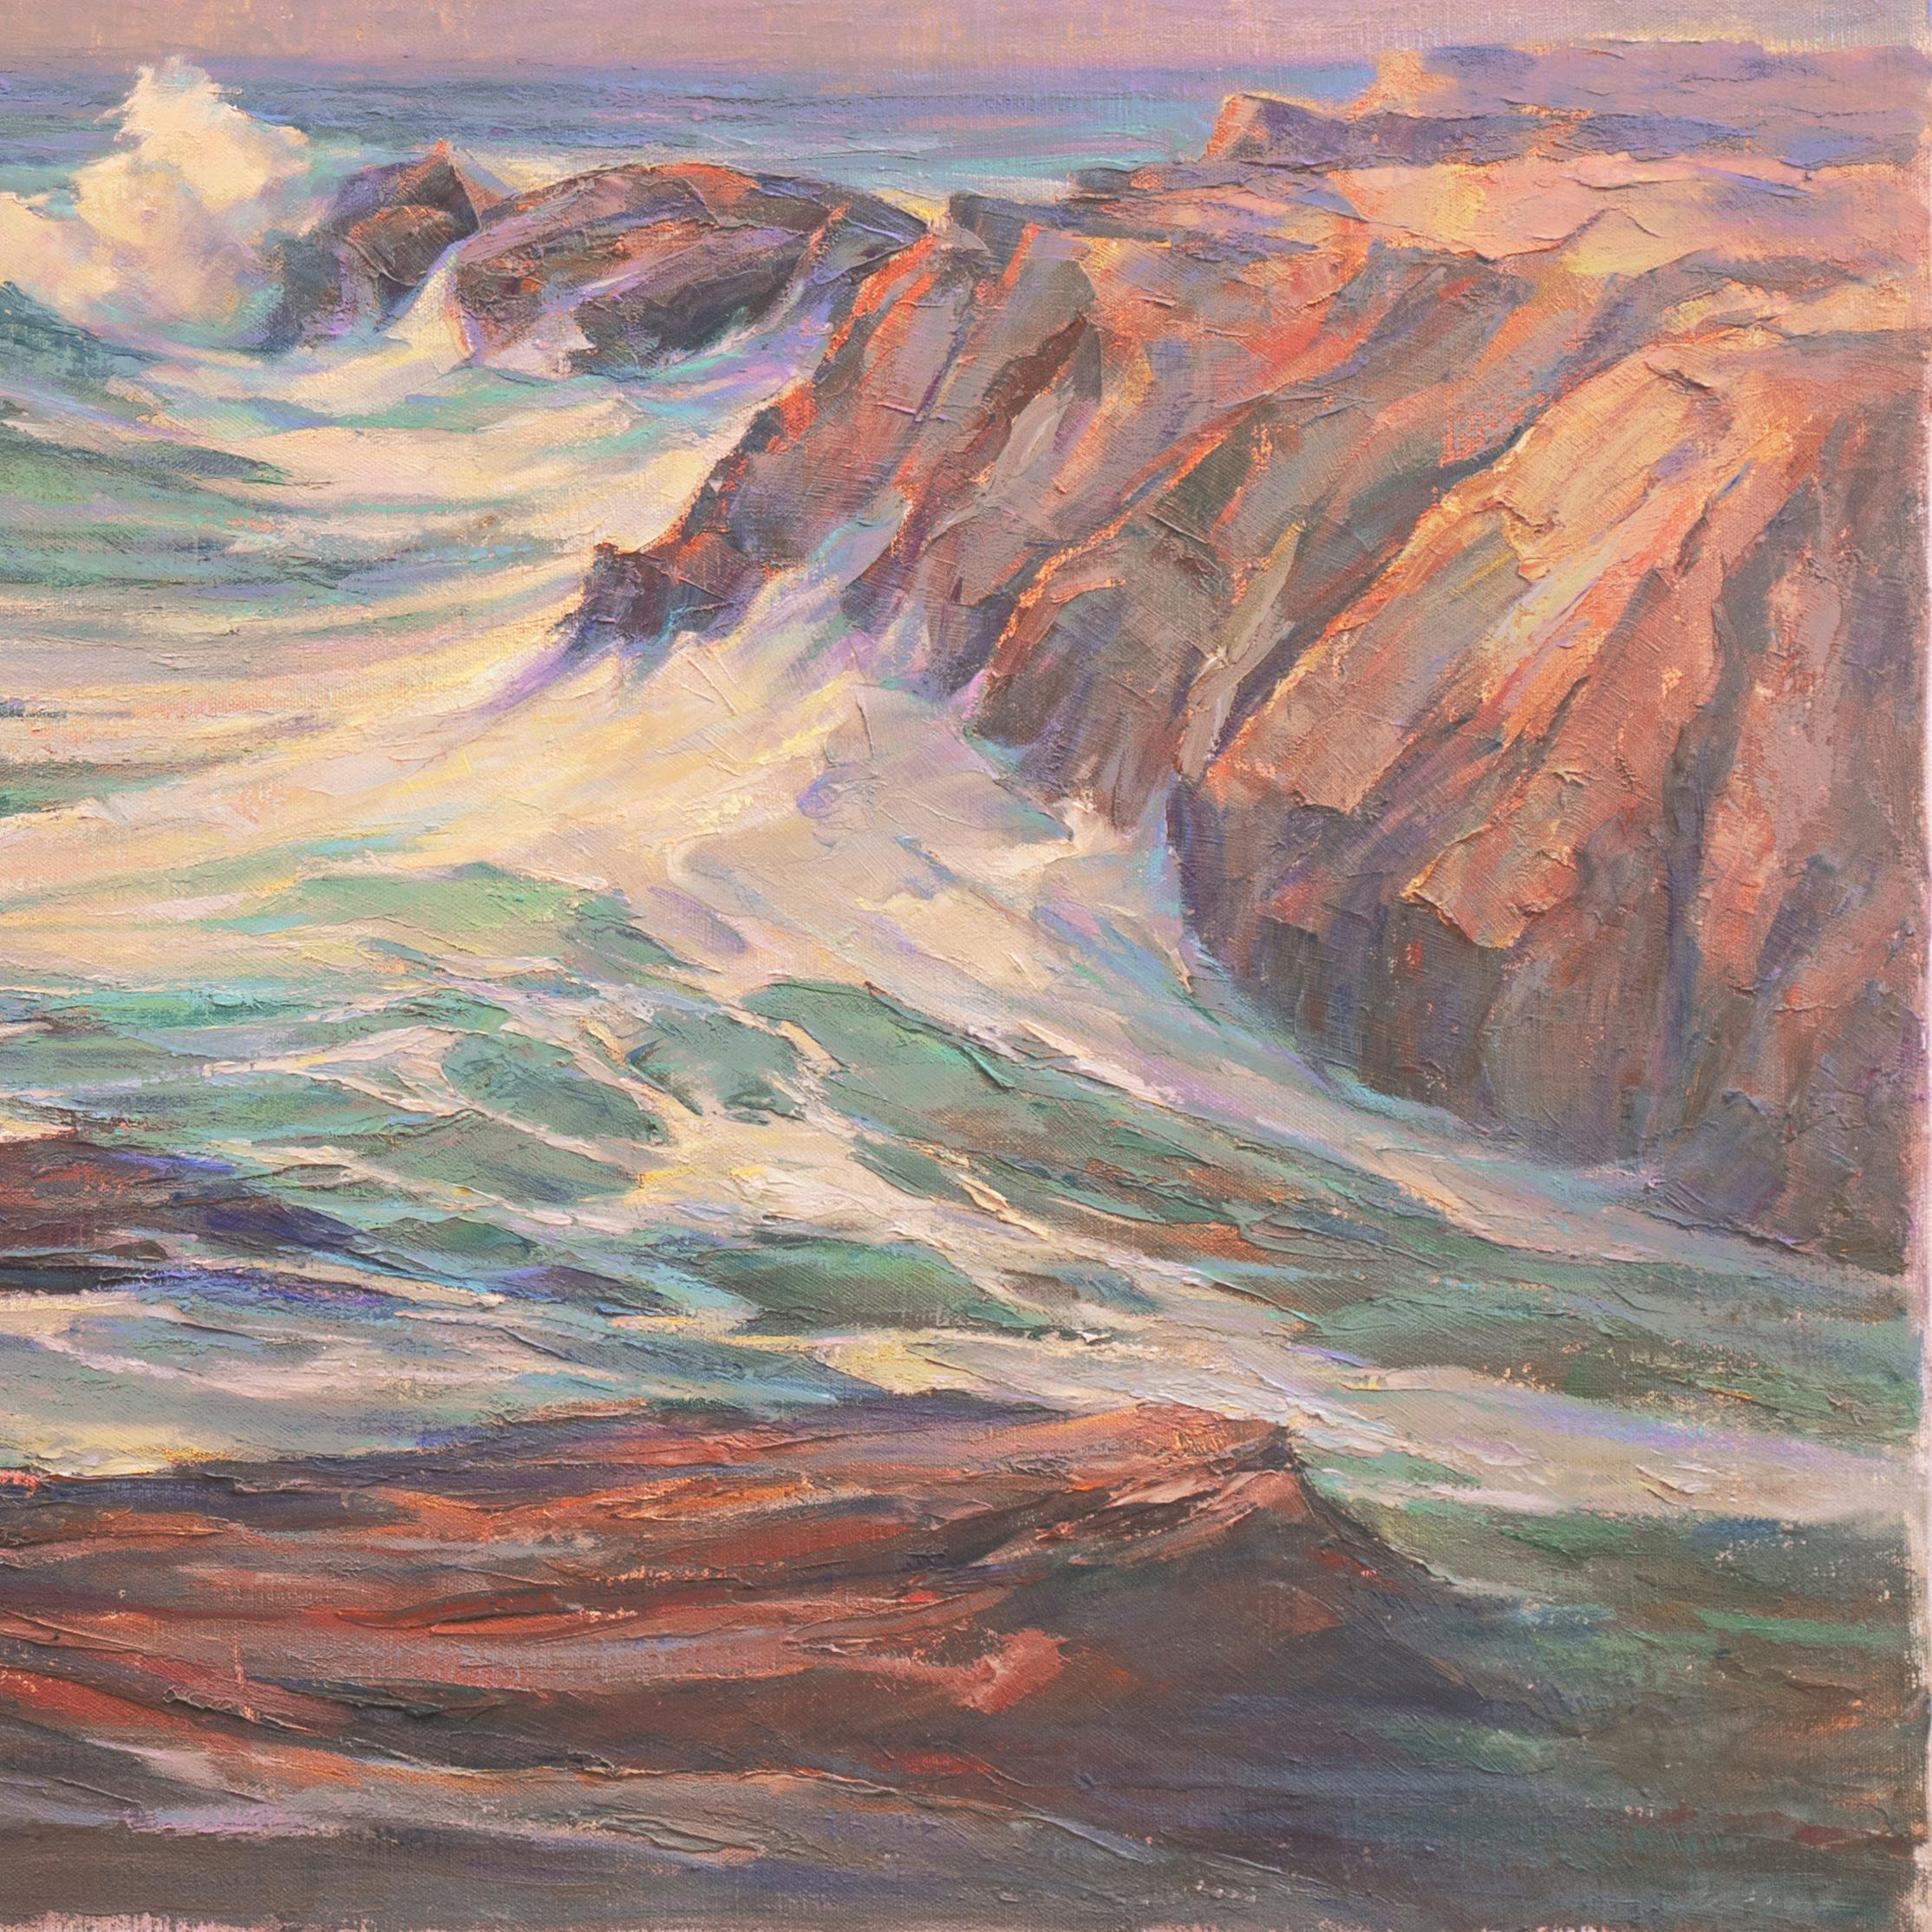 'High Tide', Santa Cruz Art League, Exhibited Seascape, San Francisco Bay Area - Impressionist Painting by Ray Radliff